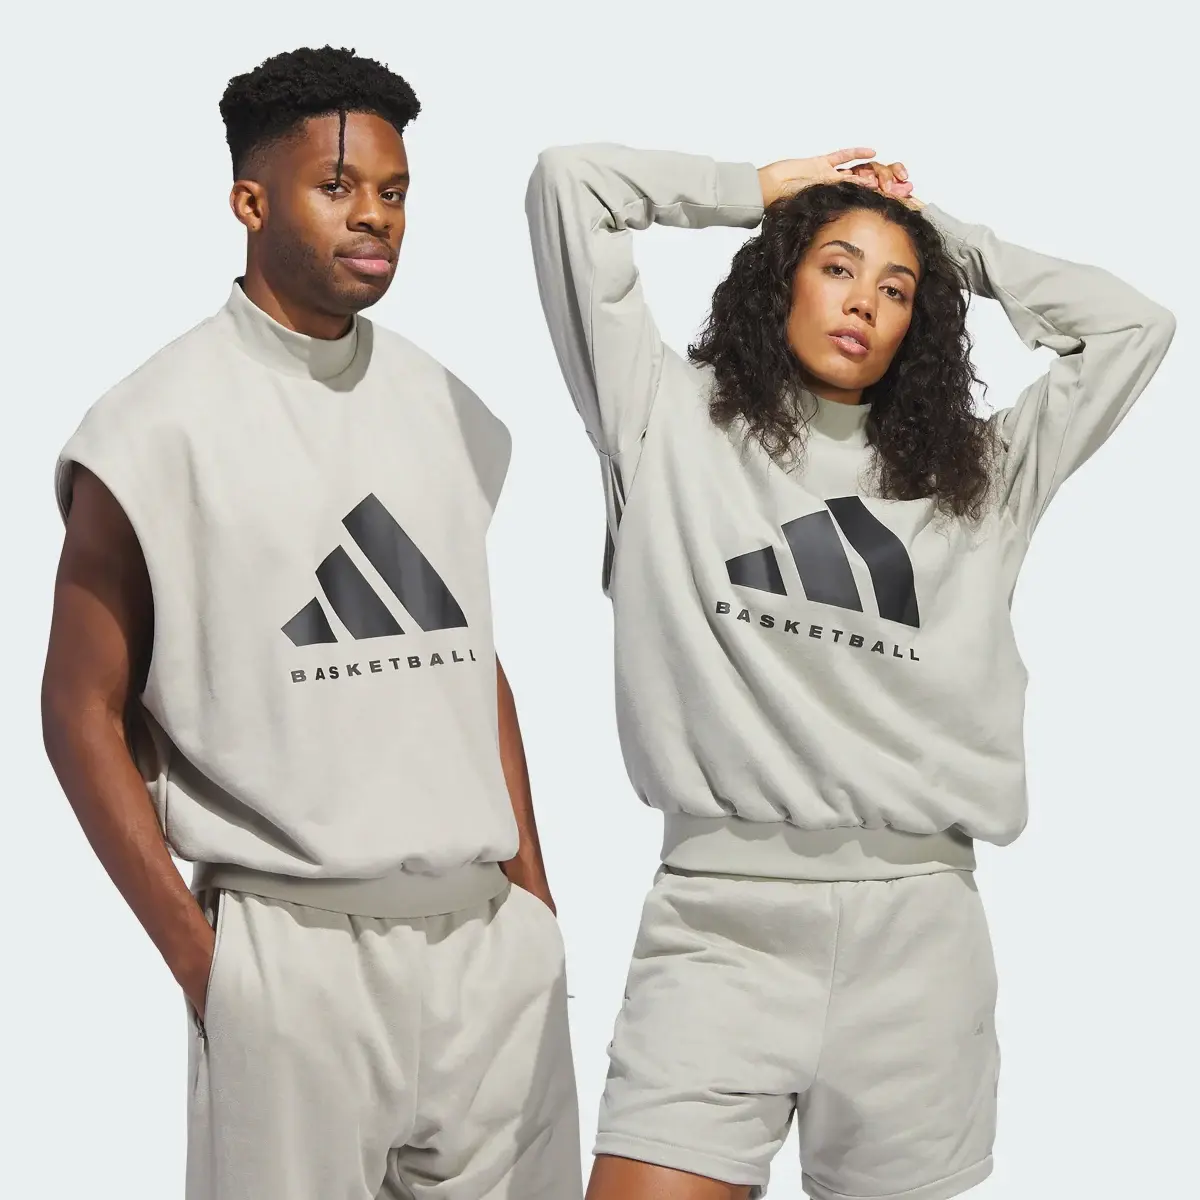 Adidas Basketball Sueded Sleeveless Sweatshirt. 1